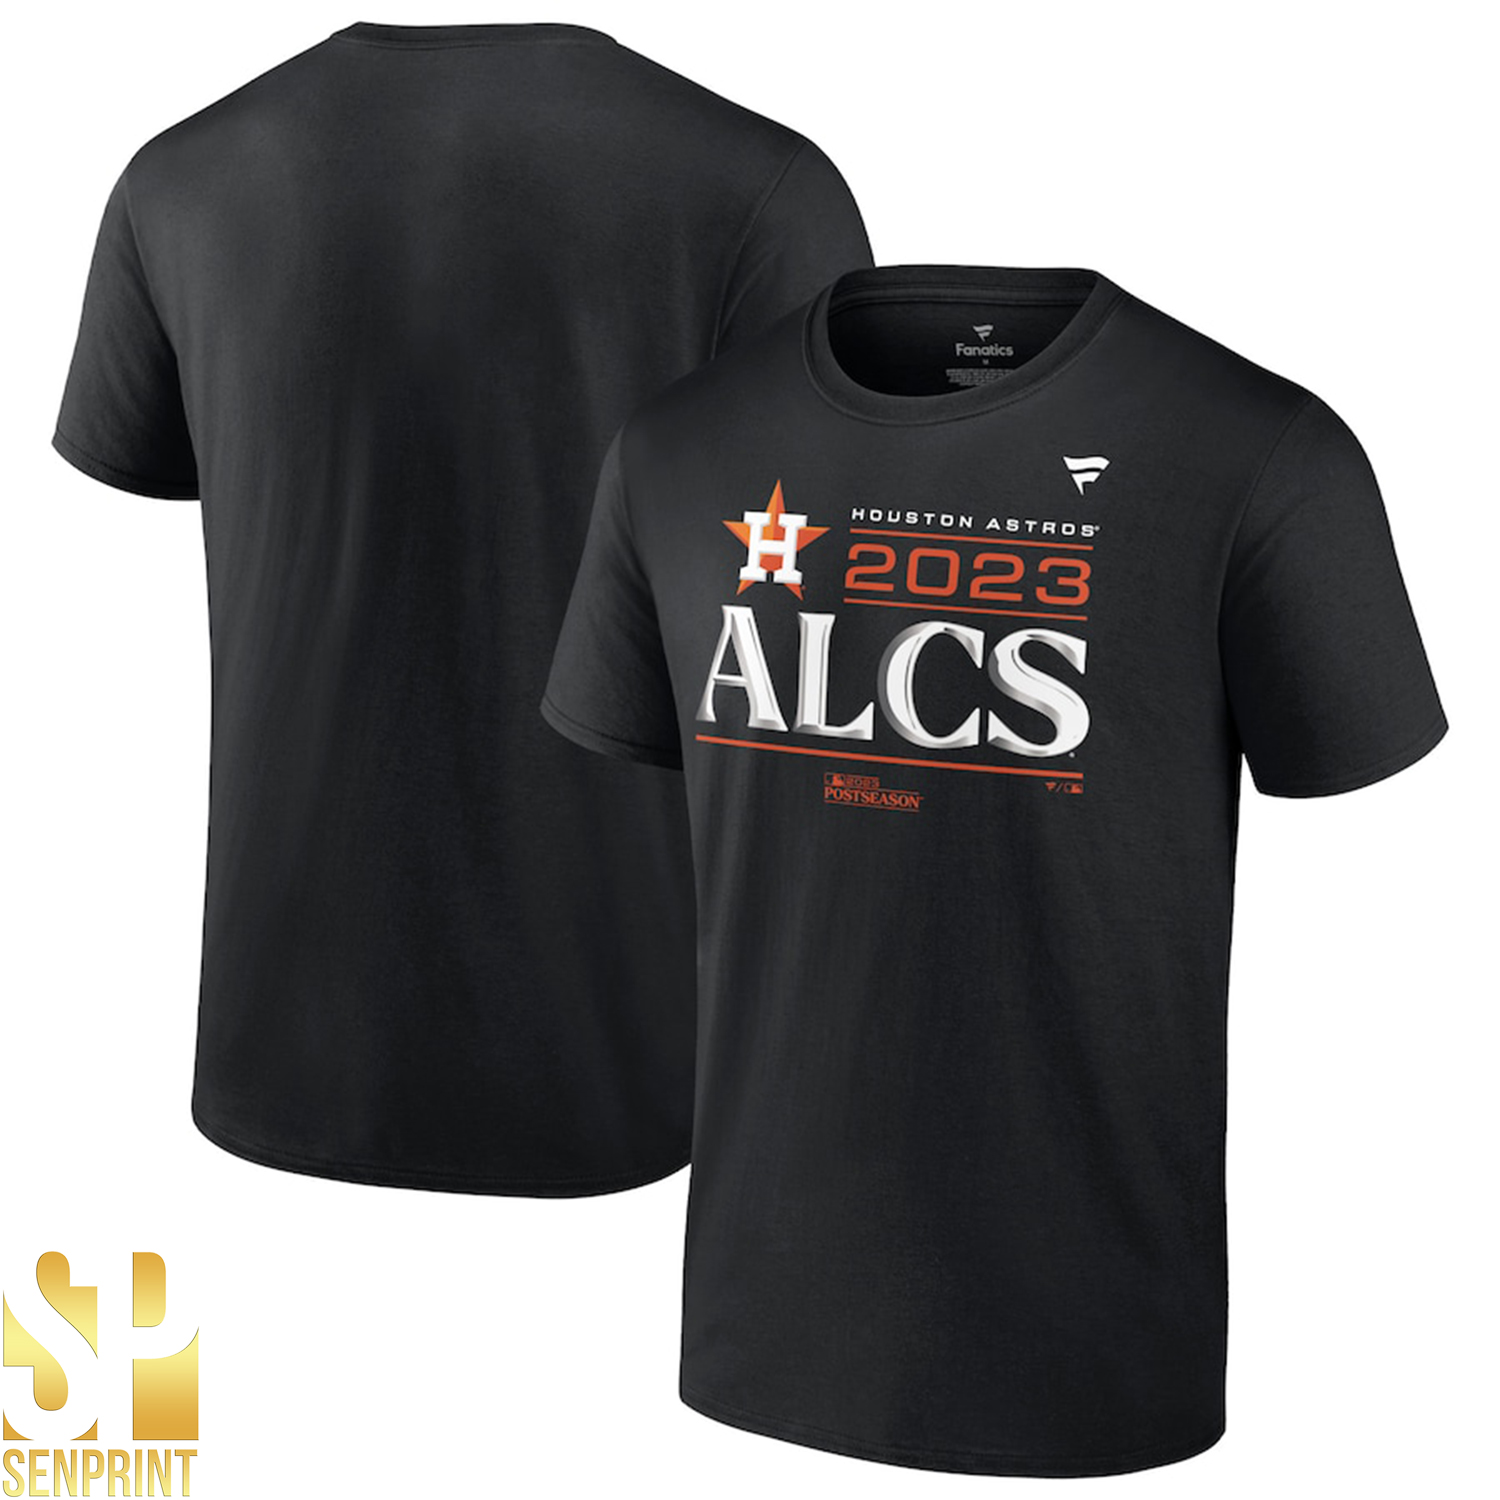 ALCS Division Series 2023 Postseason Houston Astros Shirt